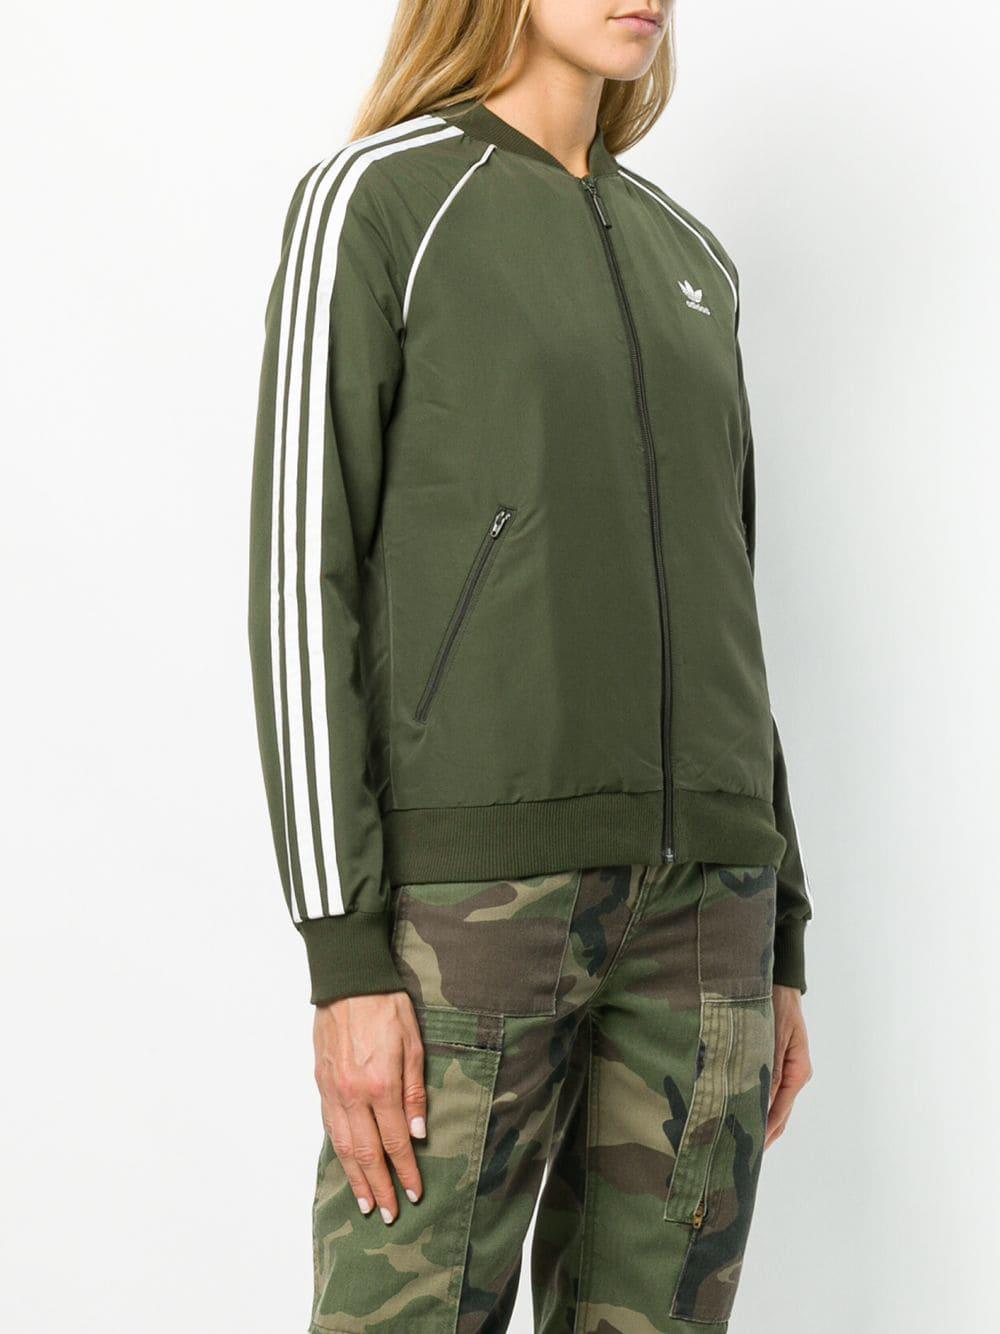 Lyst - Adidas Originals Sst Track Jacket in Green